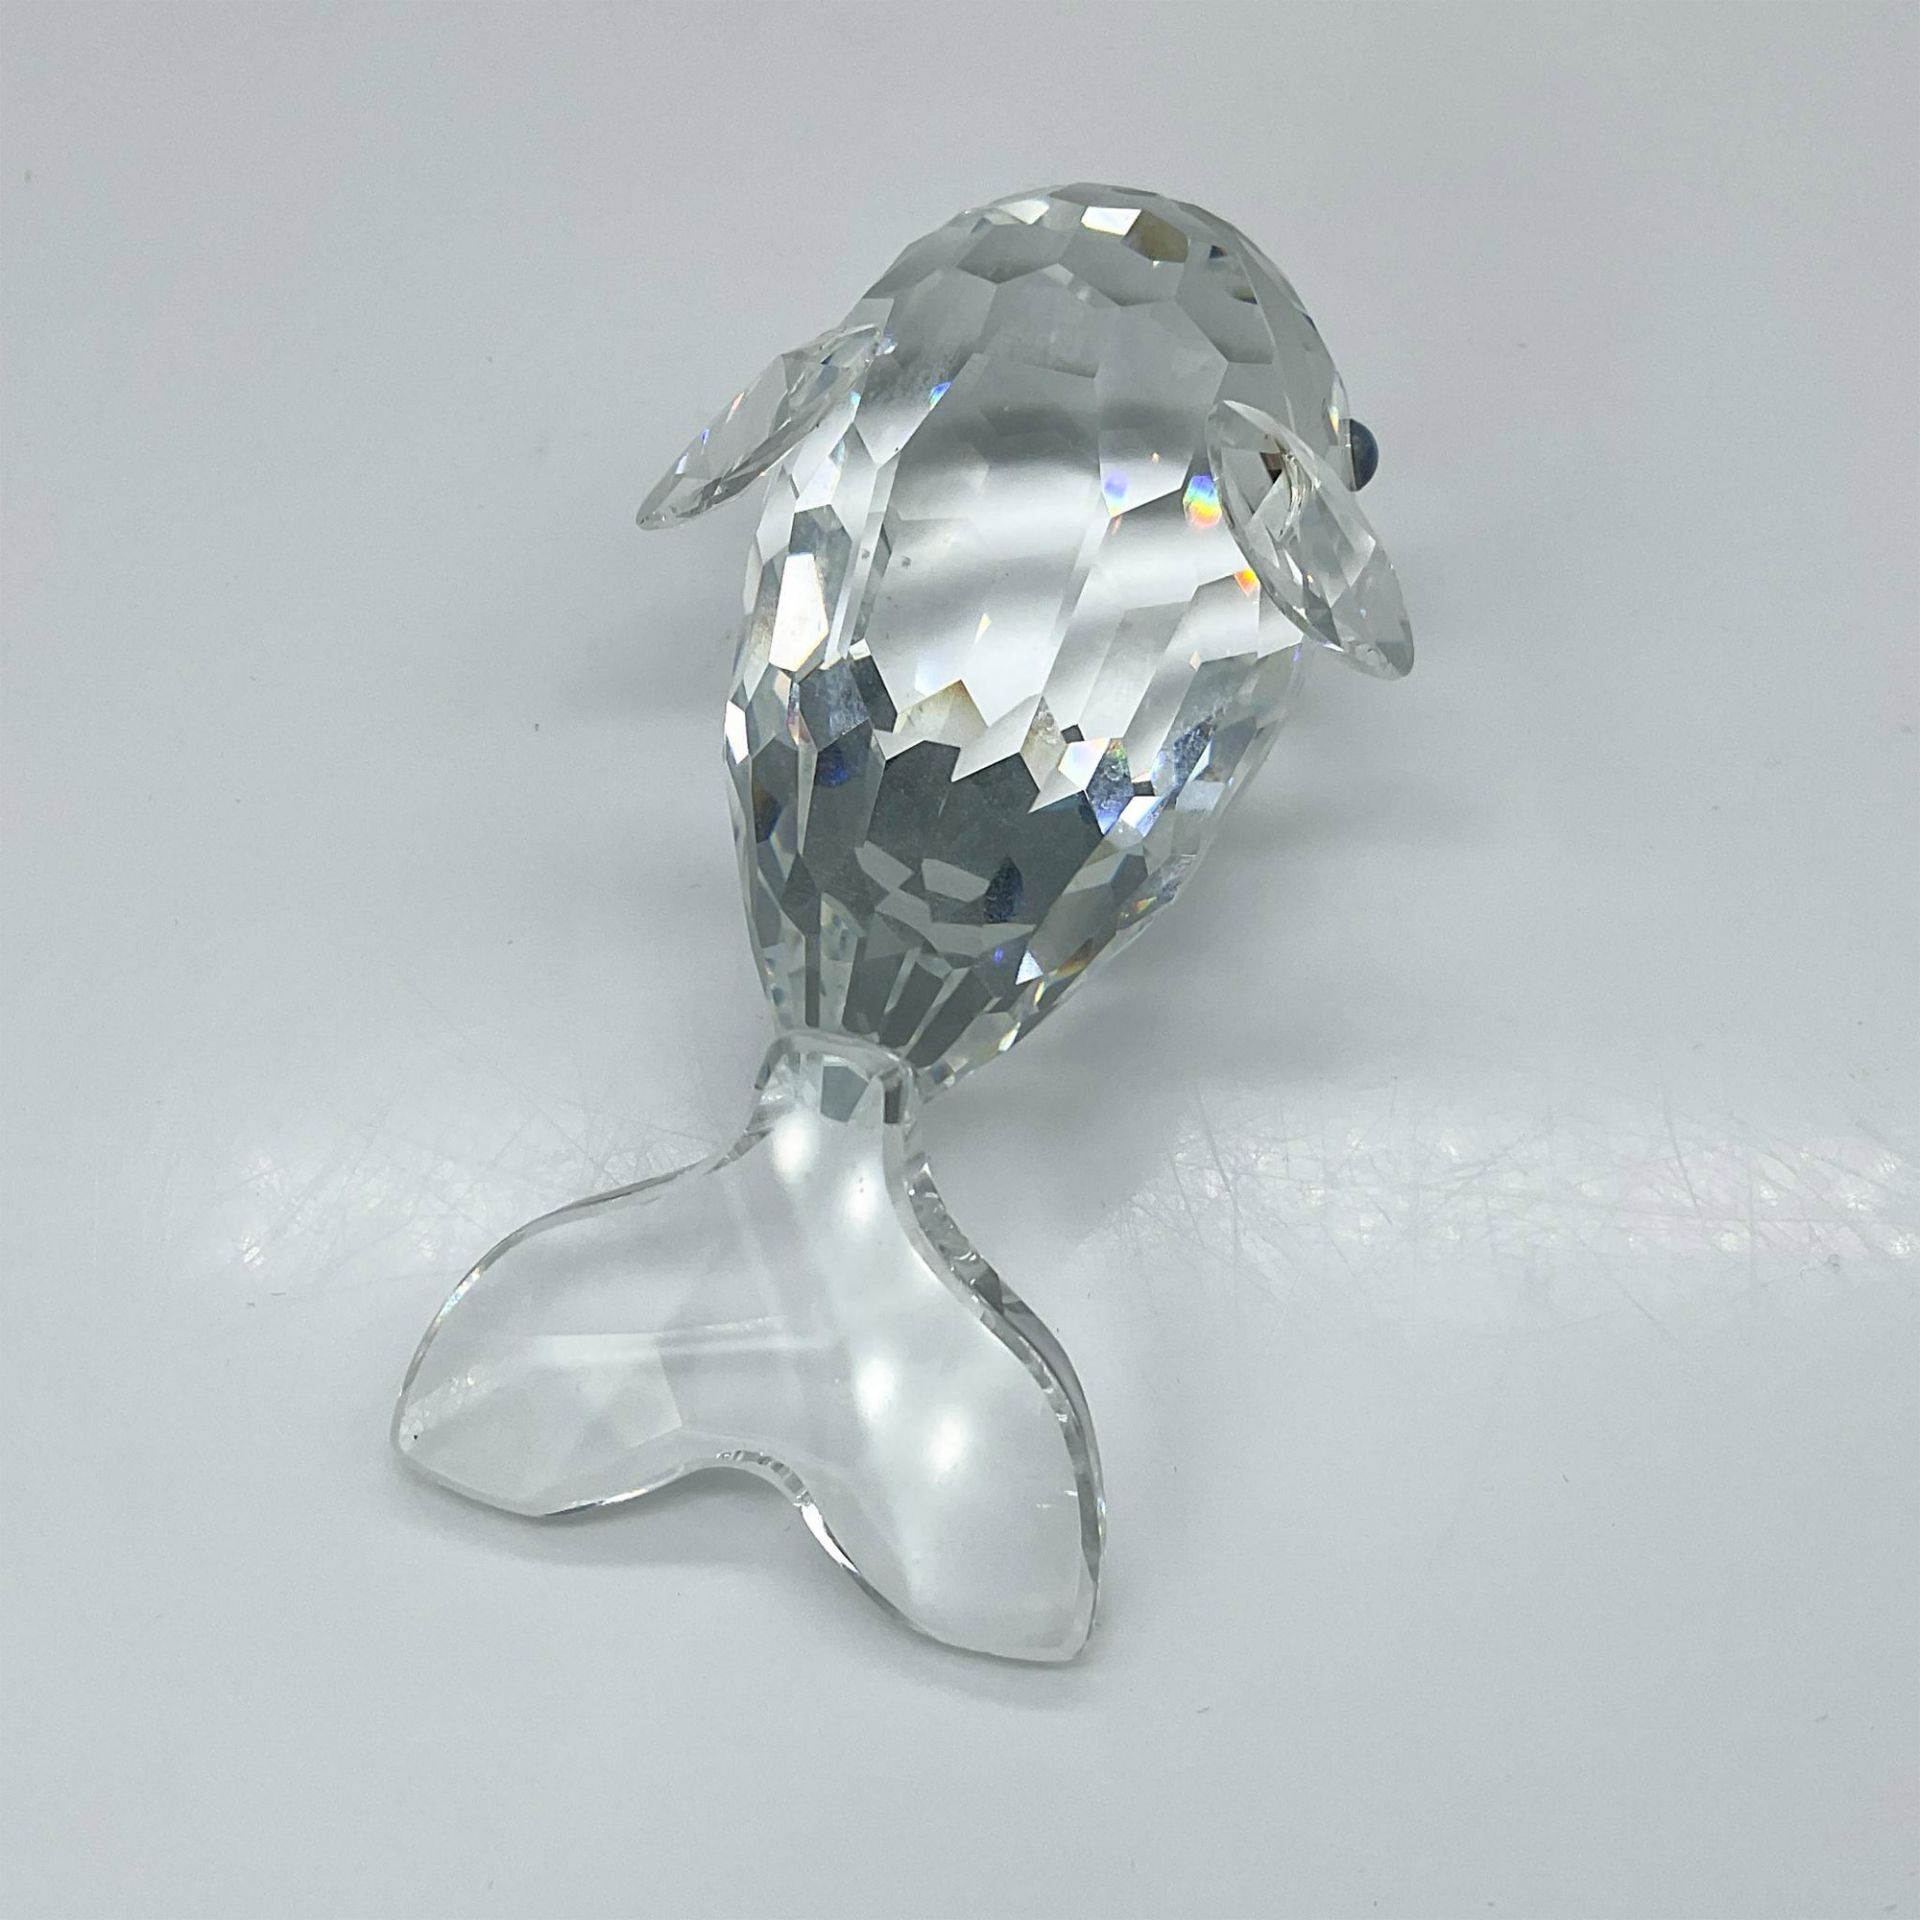 Swarovski Crystal Figurine, Whale - Image 3 of 3